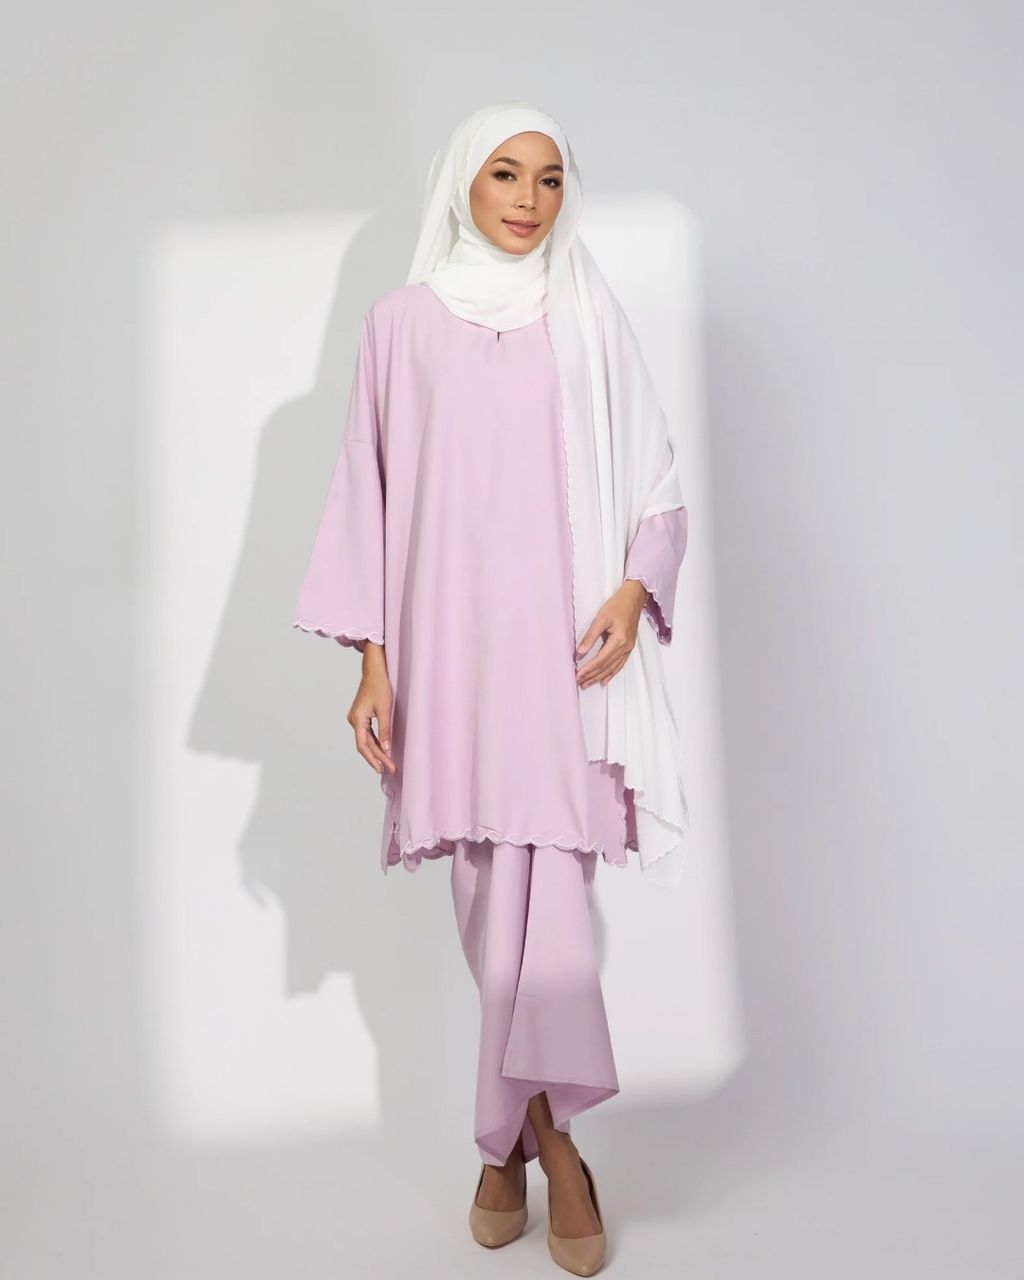 haura-wear-eidra-skirt-set-sulam-embroidery-pario-klasik-tradisional-mini kebaya-fabrik eyelet-raya-muslimah-long-sleeve-baju-skirt-kain-perempuan-baju-sepasang (10)